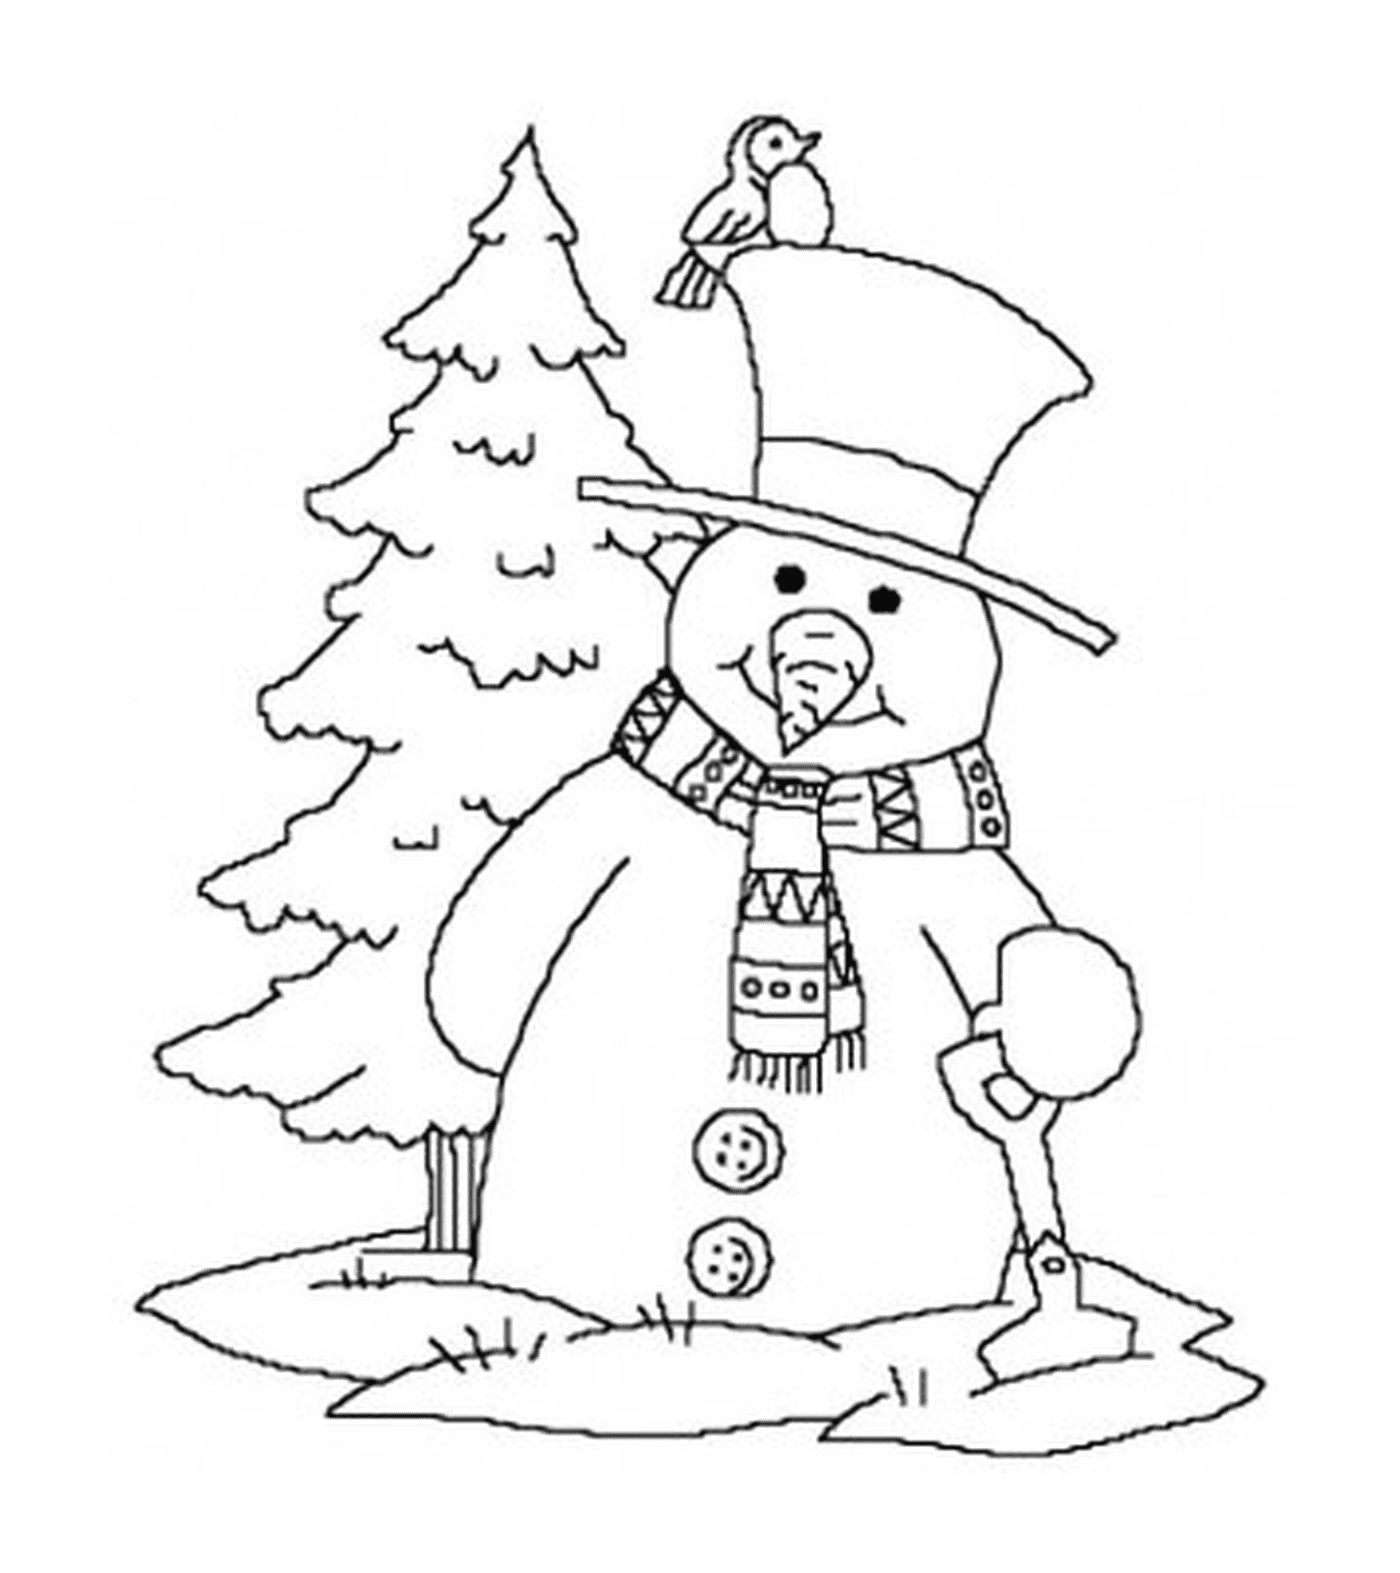  Snowman next to a tree 